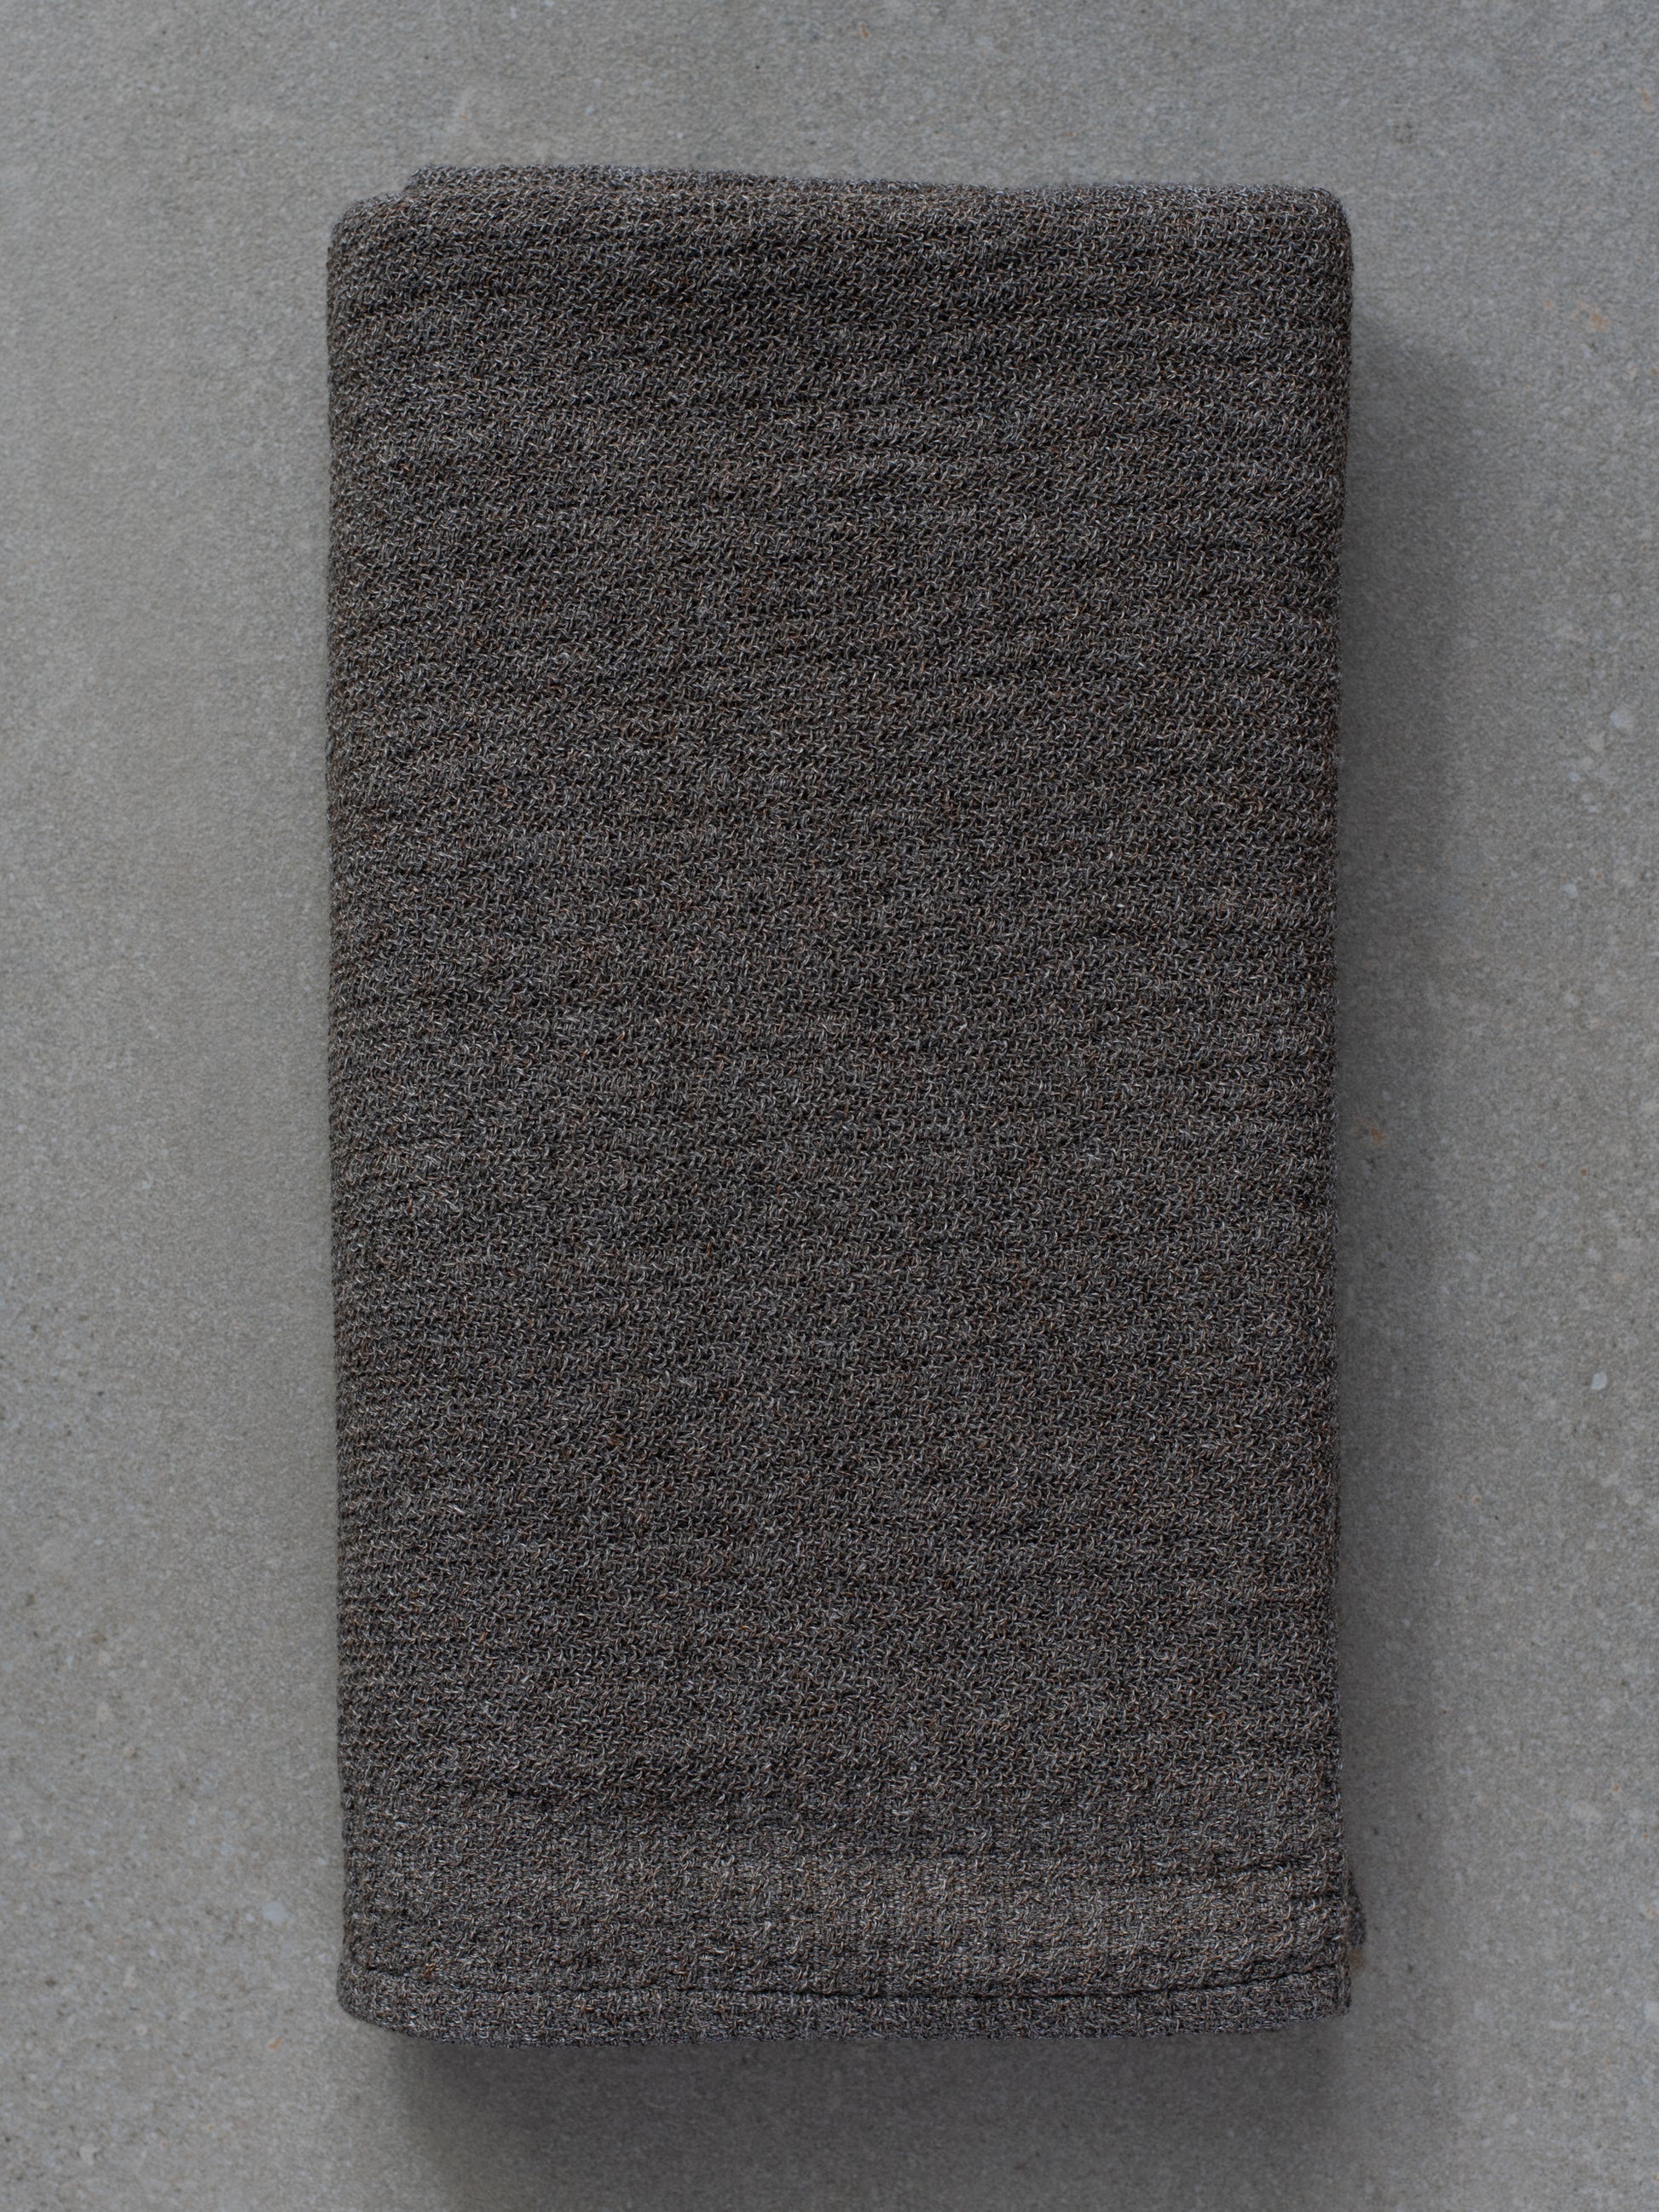 Kontex Lana Towel X-Large - Brown